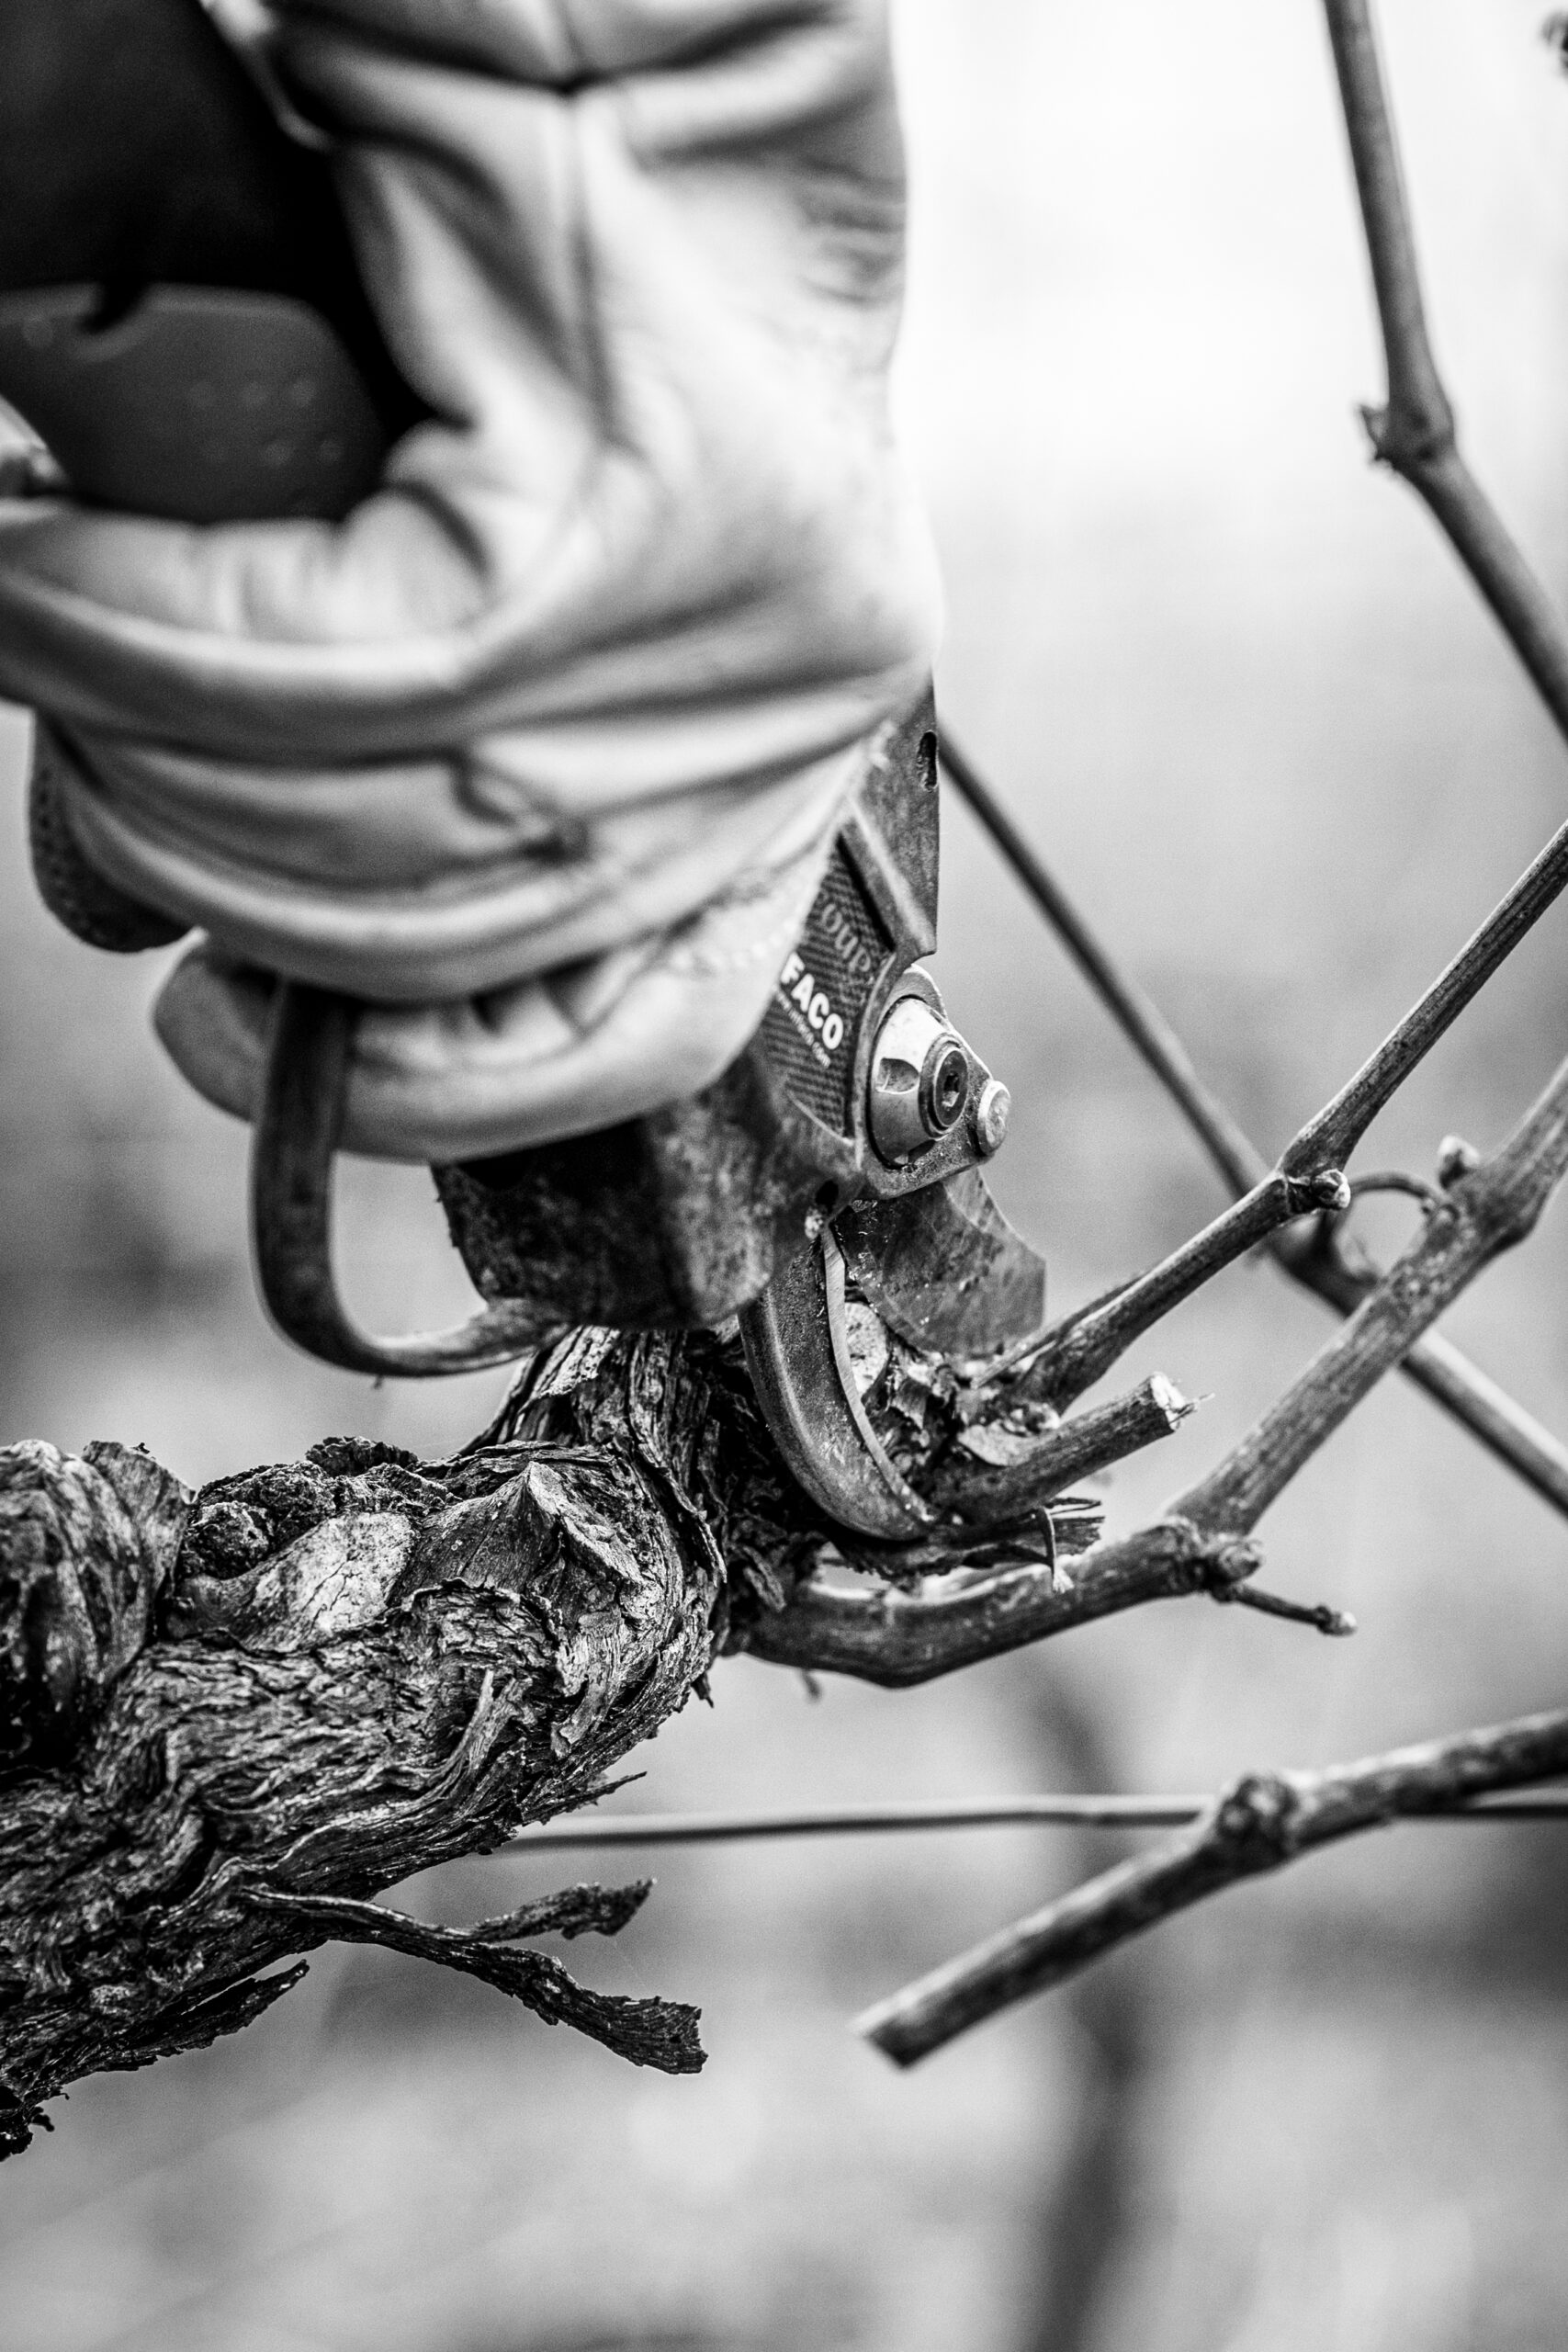 Reportage photo viticulture vigneron vignoble vin terroir agriculture